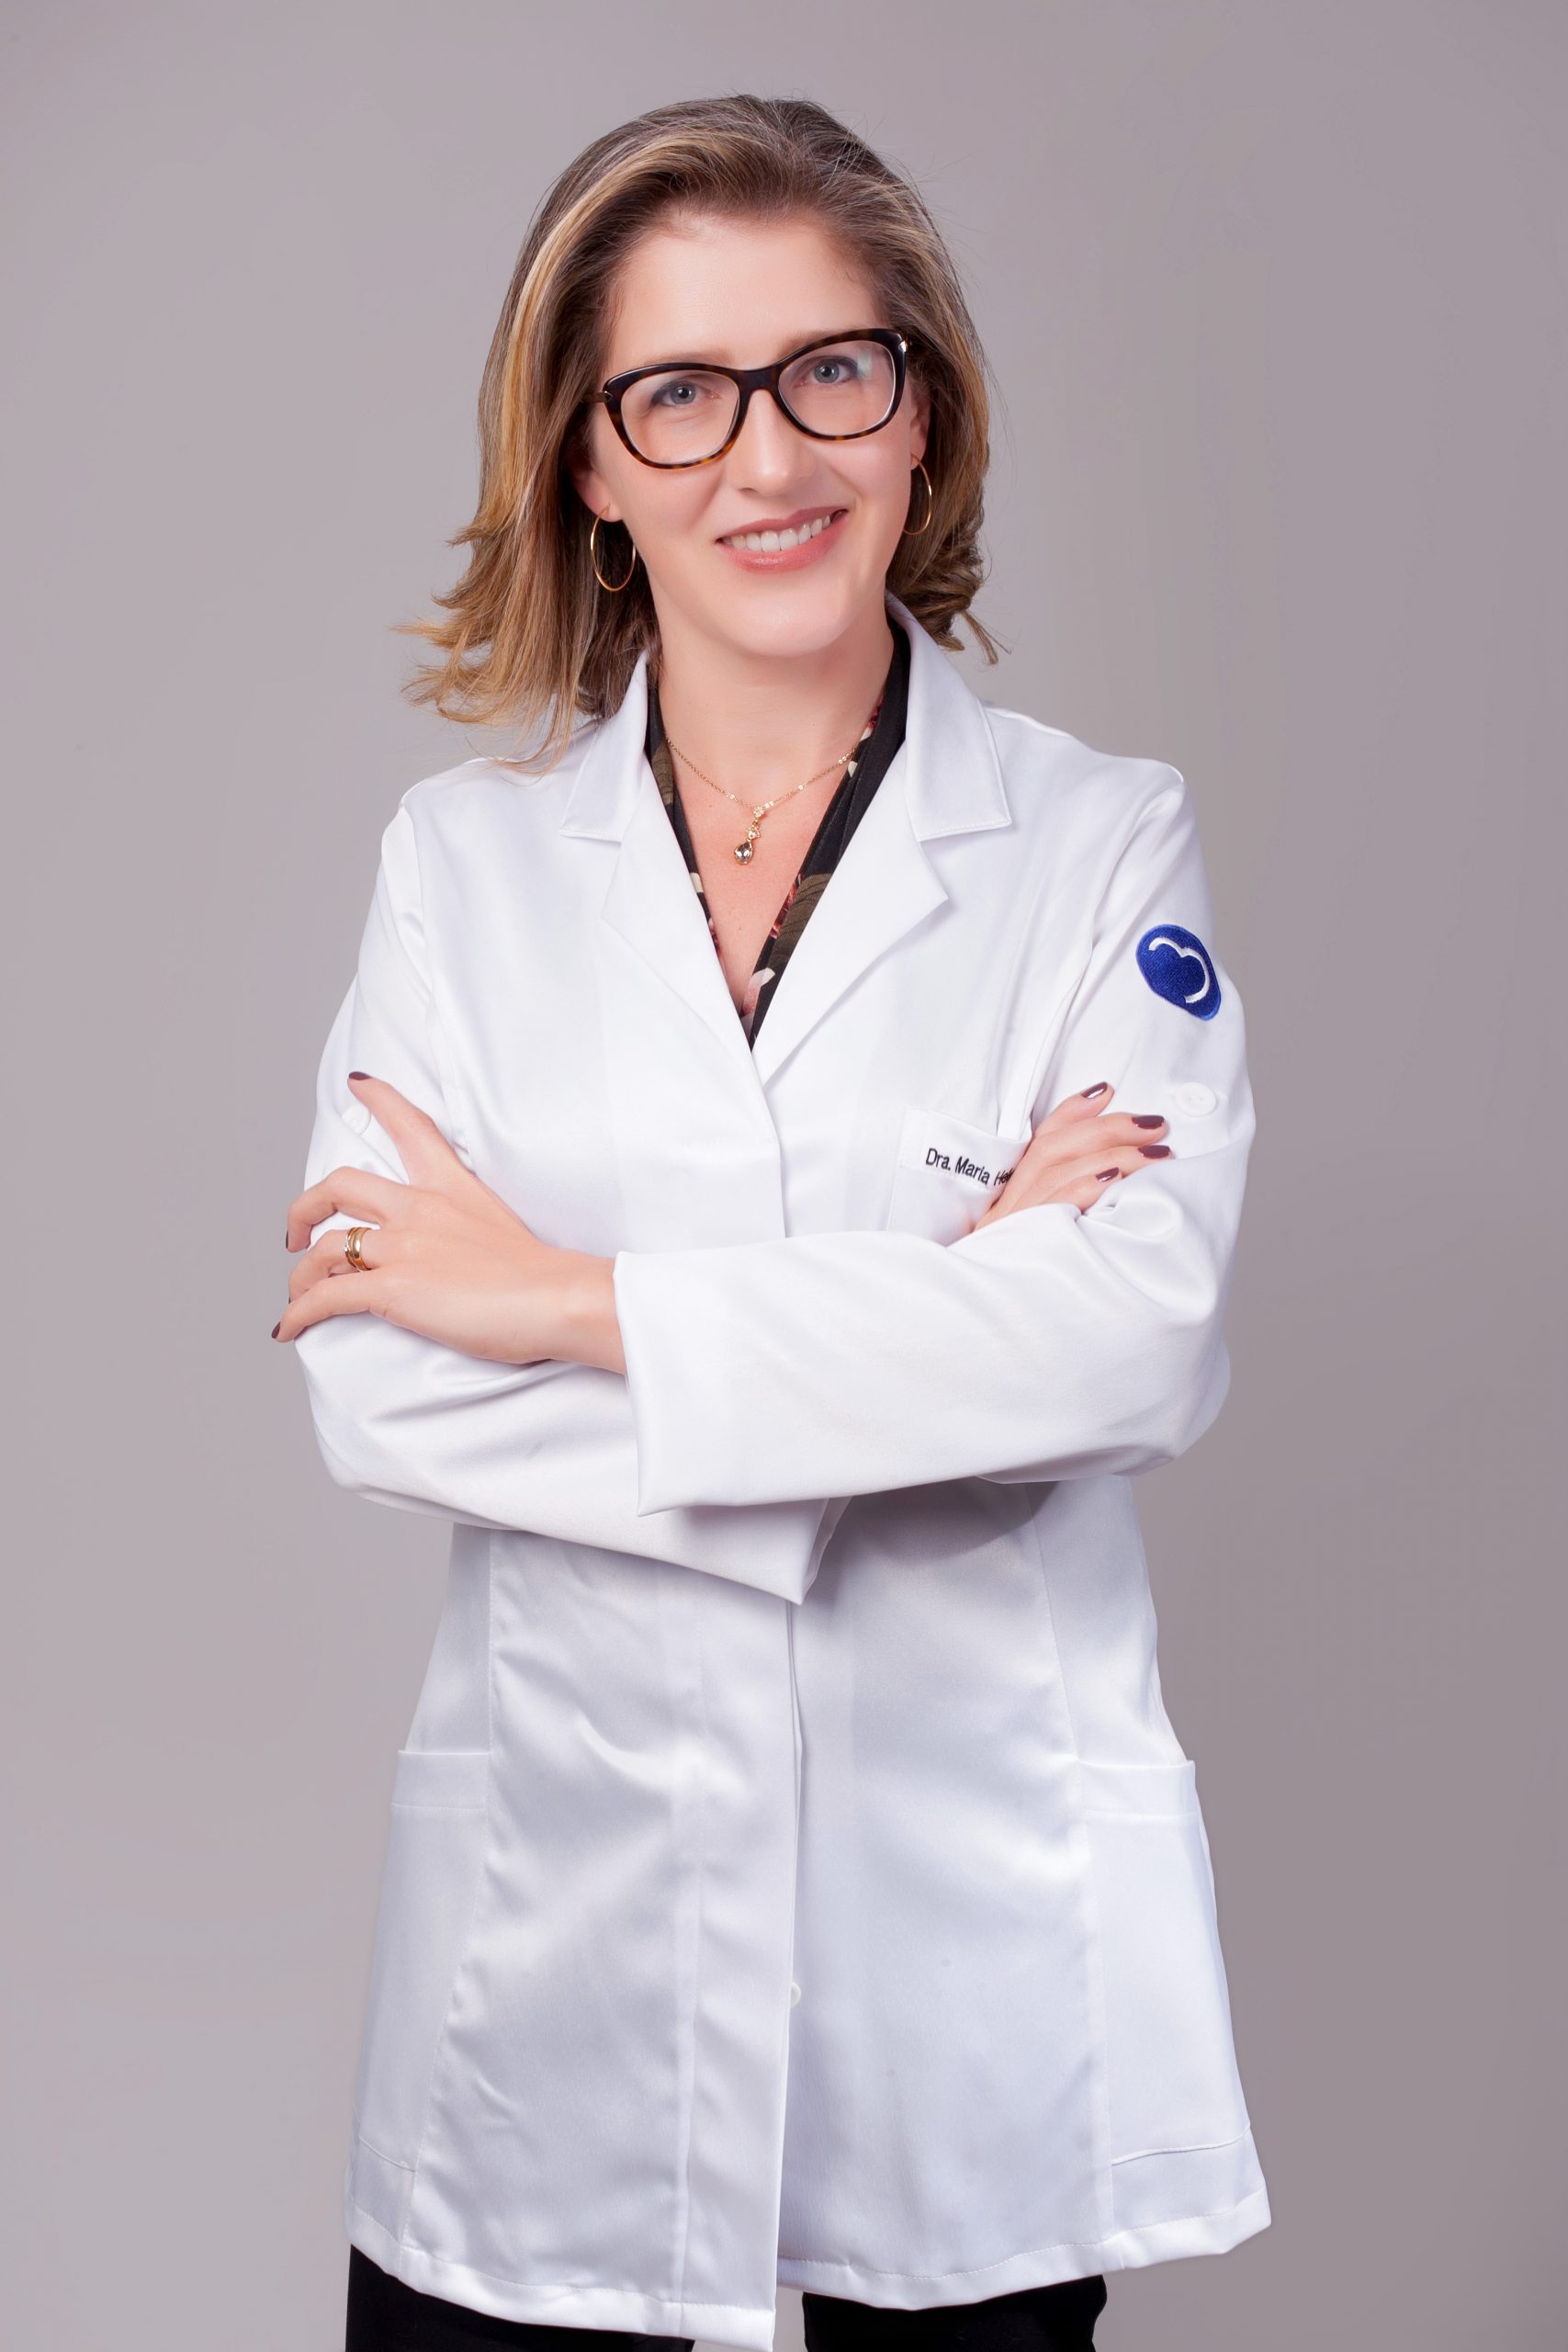 Dra. Maria Helena Moraes Antunes